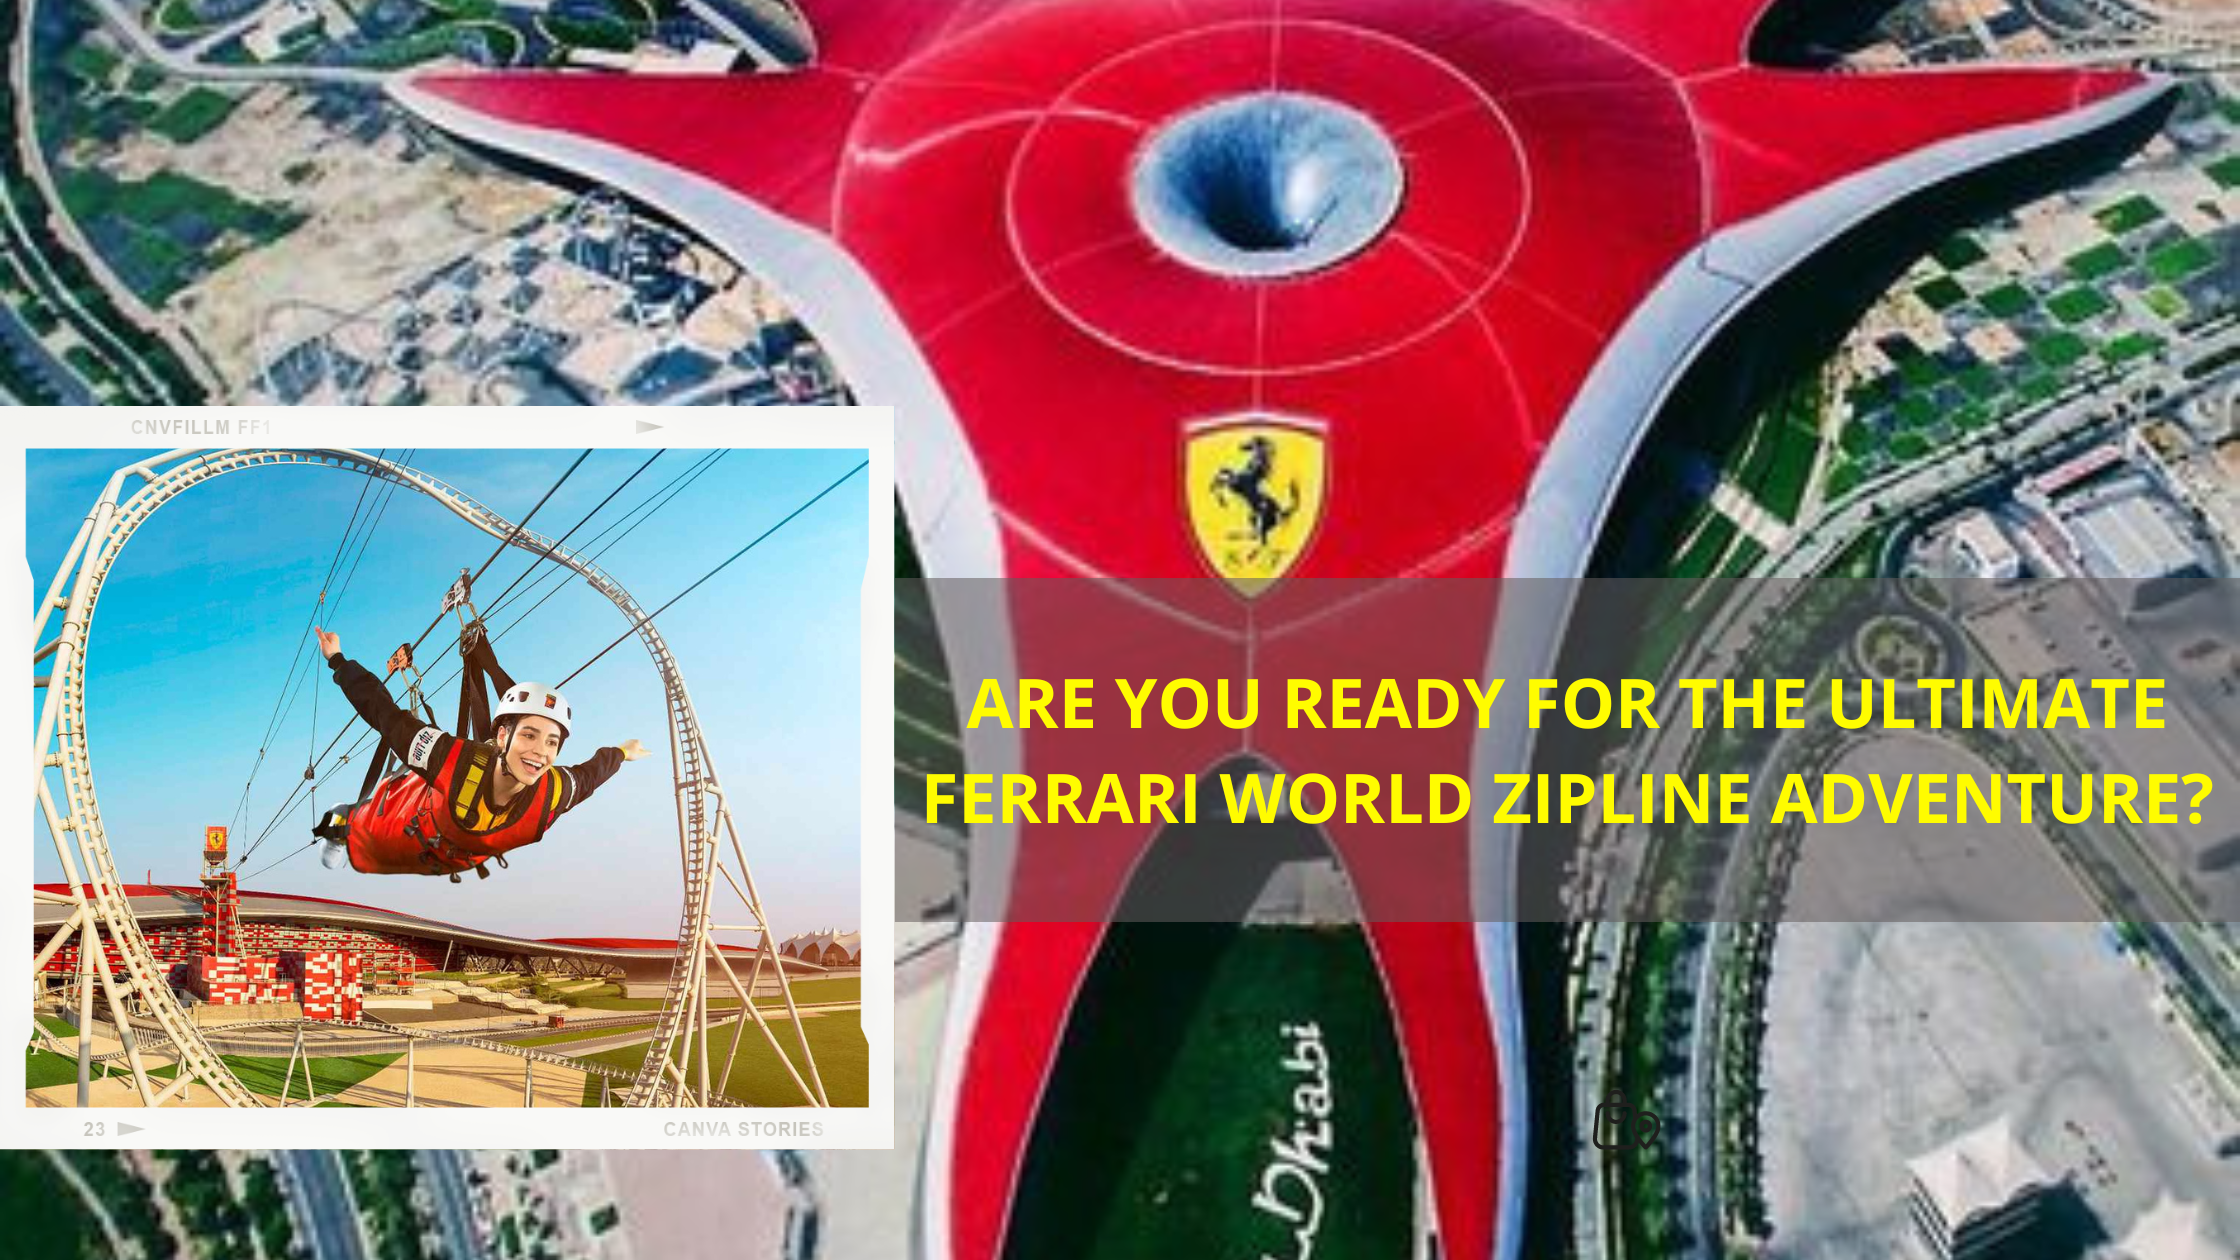 Related Blog Post - Get Your Adrenaline Pumping with the Ferrari World Zipline Adventure